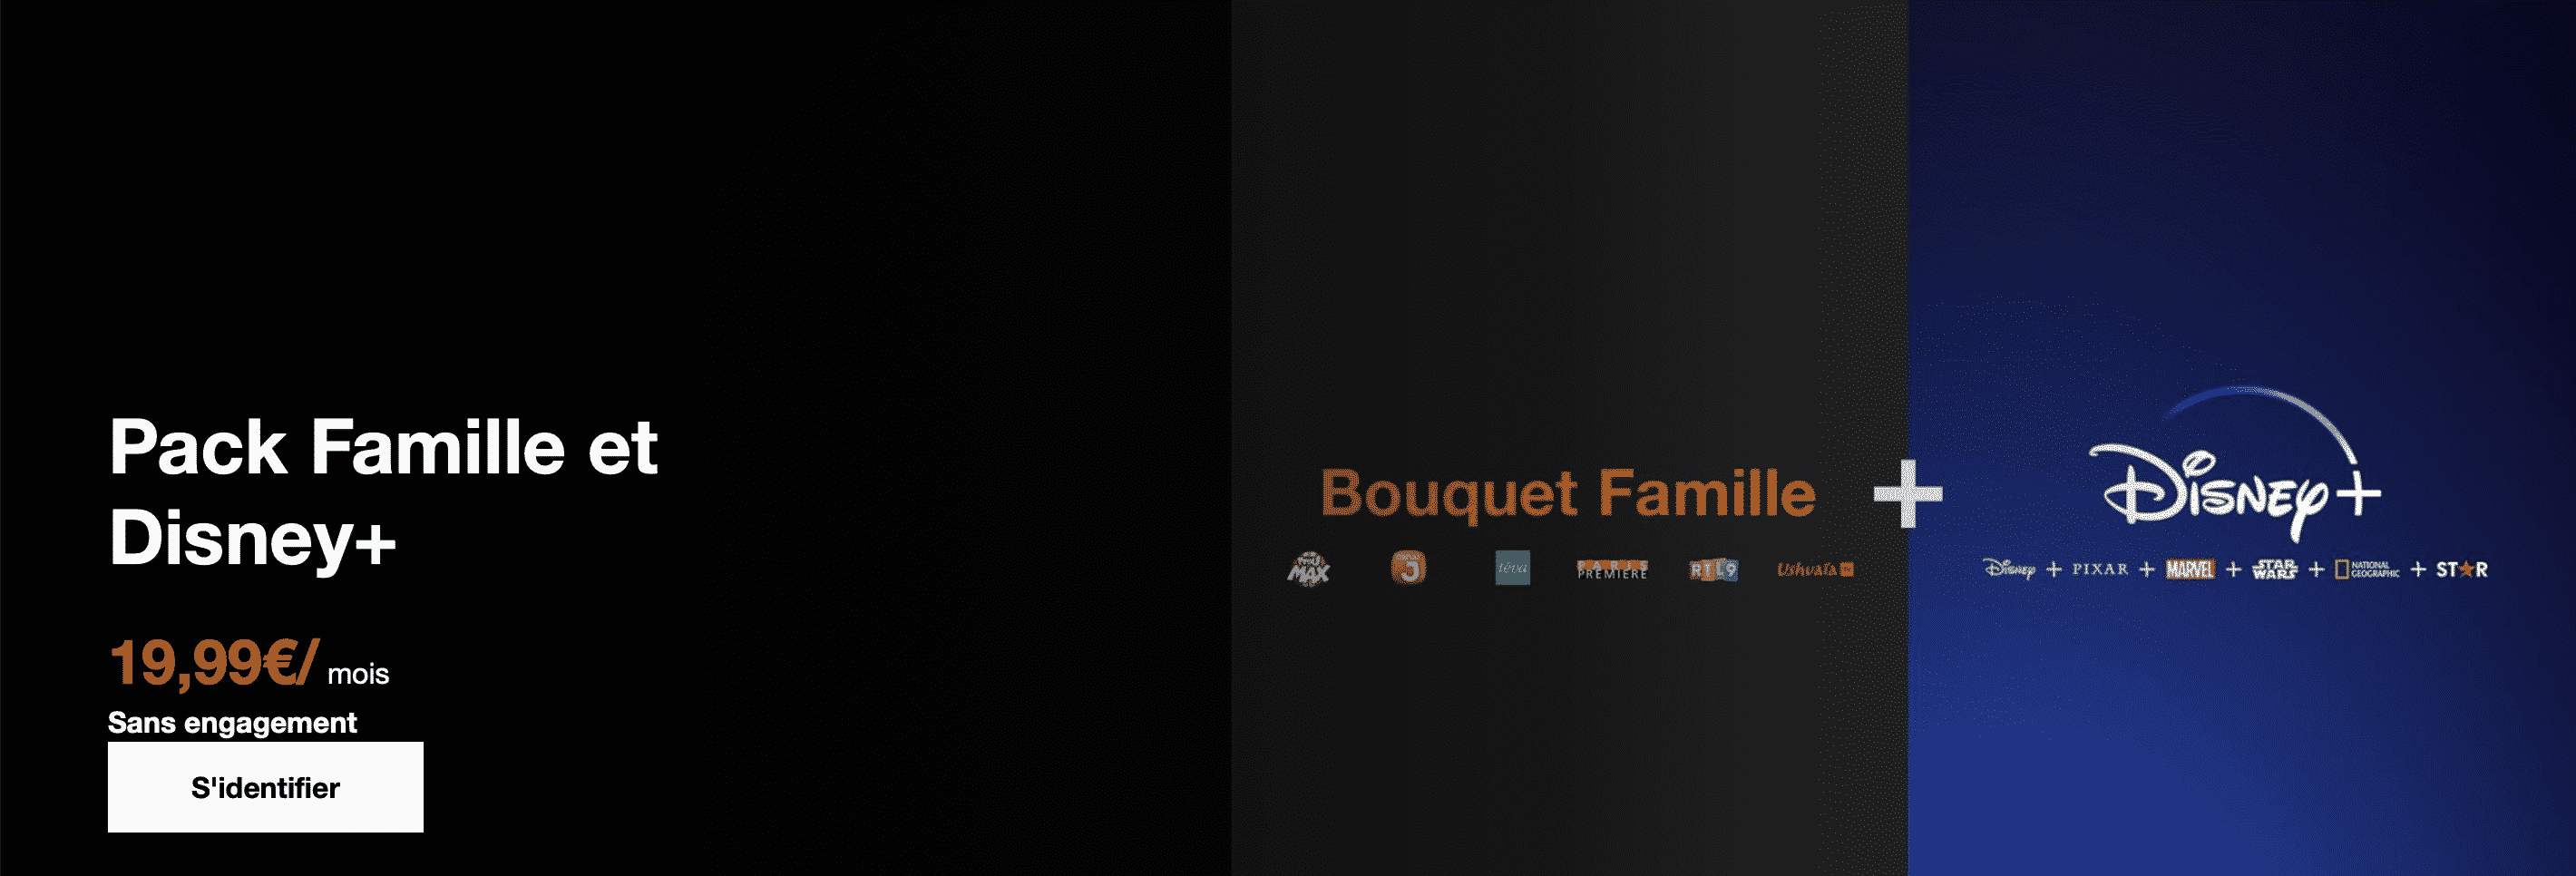 Bouquet Famille + Disney+ Orange